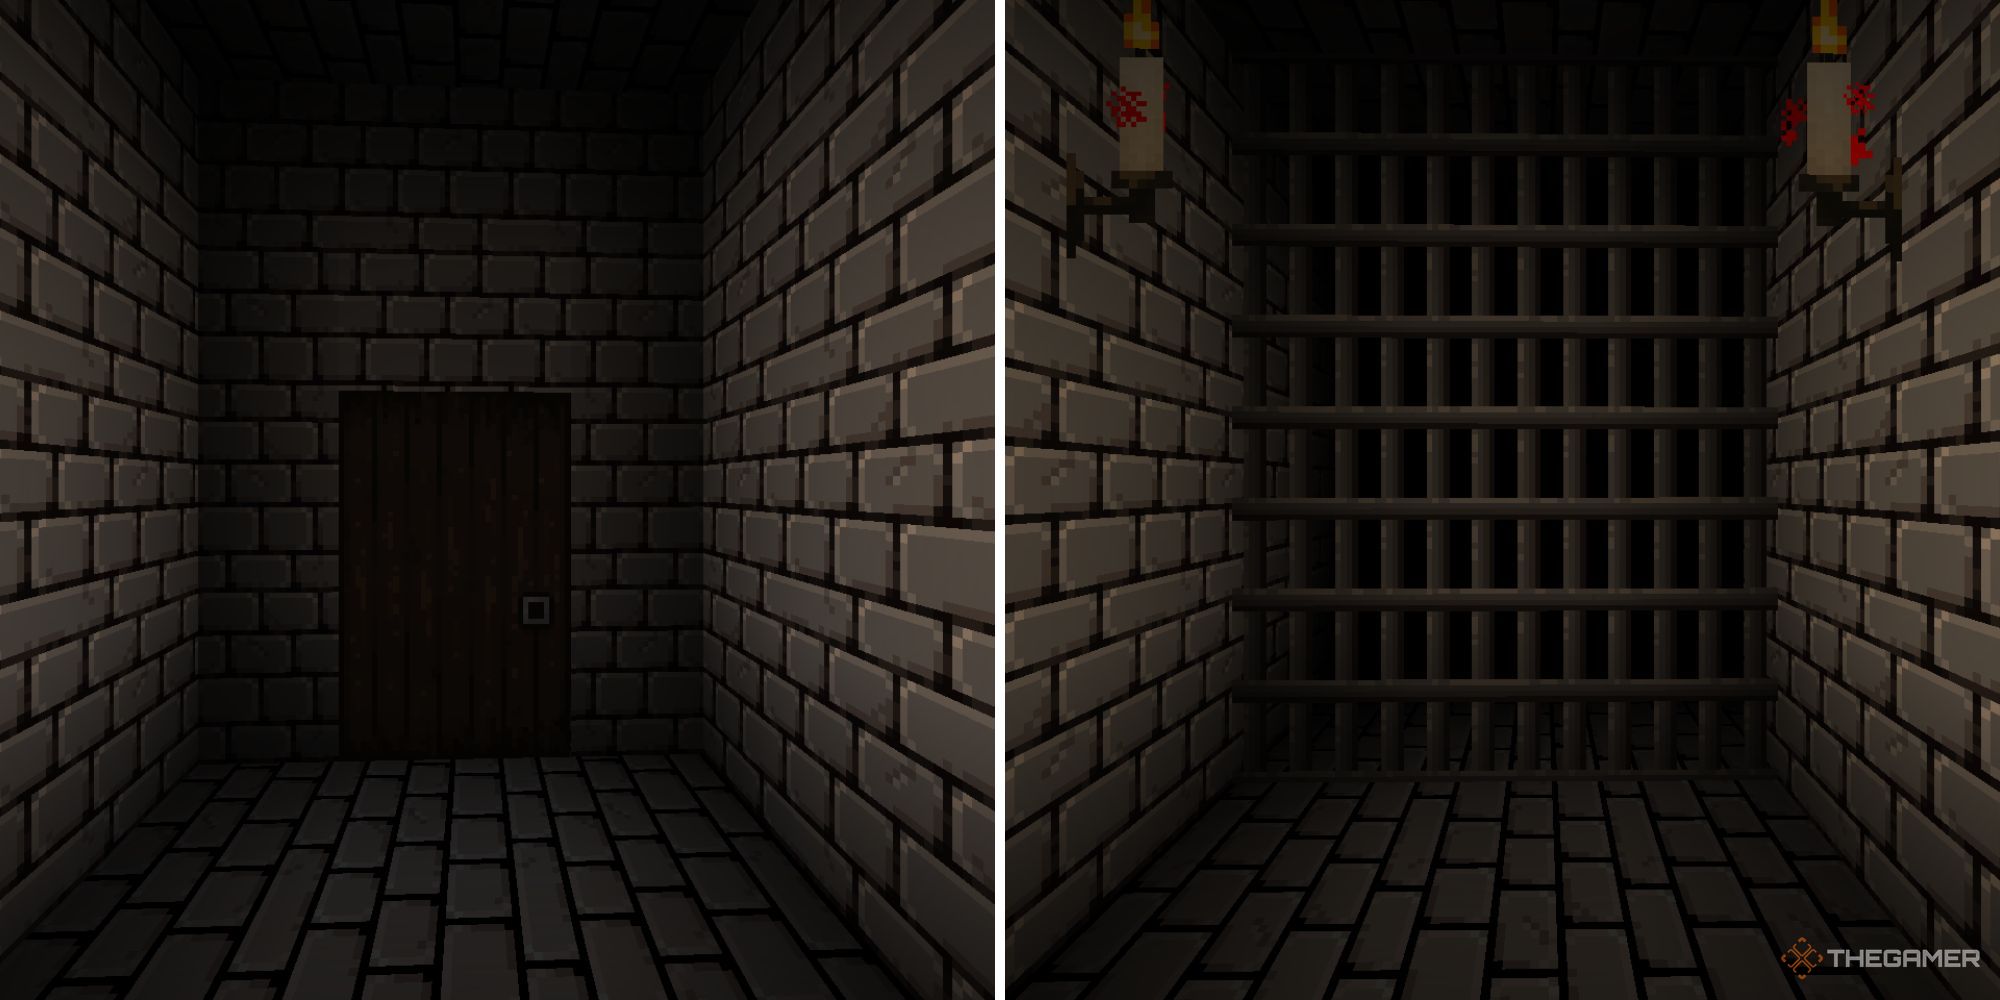 A split image of dark, stone brick corridors showing a wood door and iron bars.